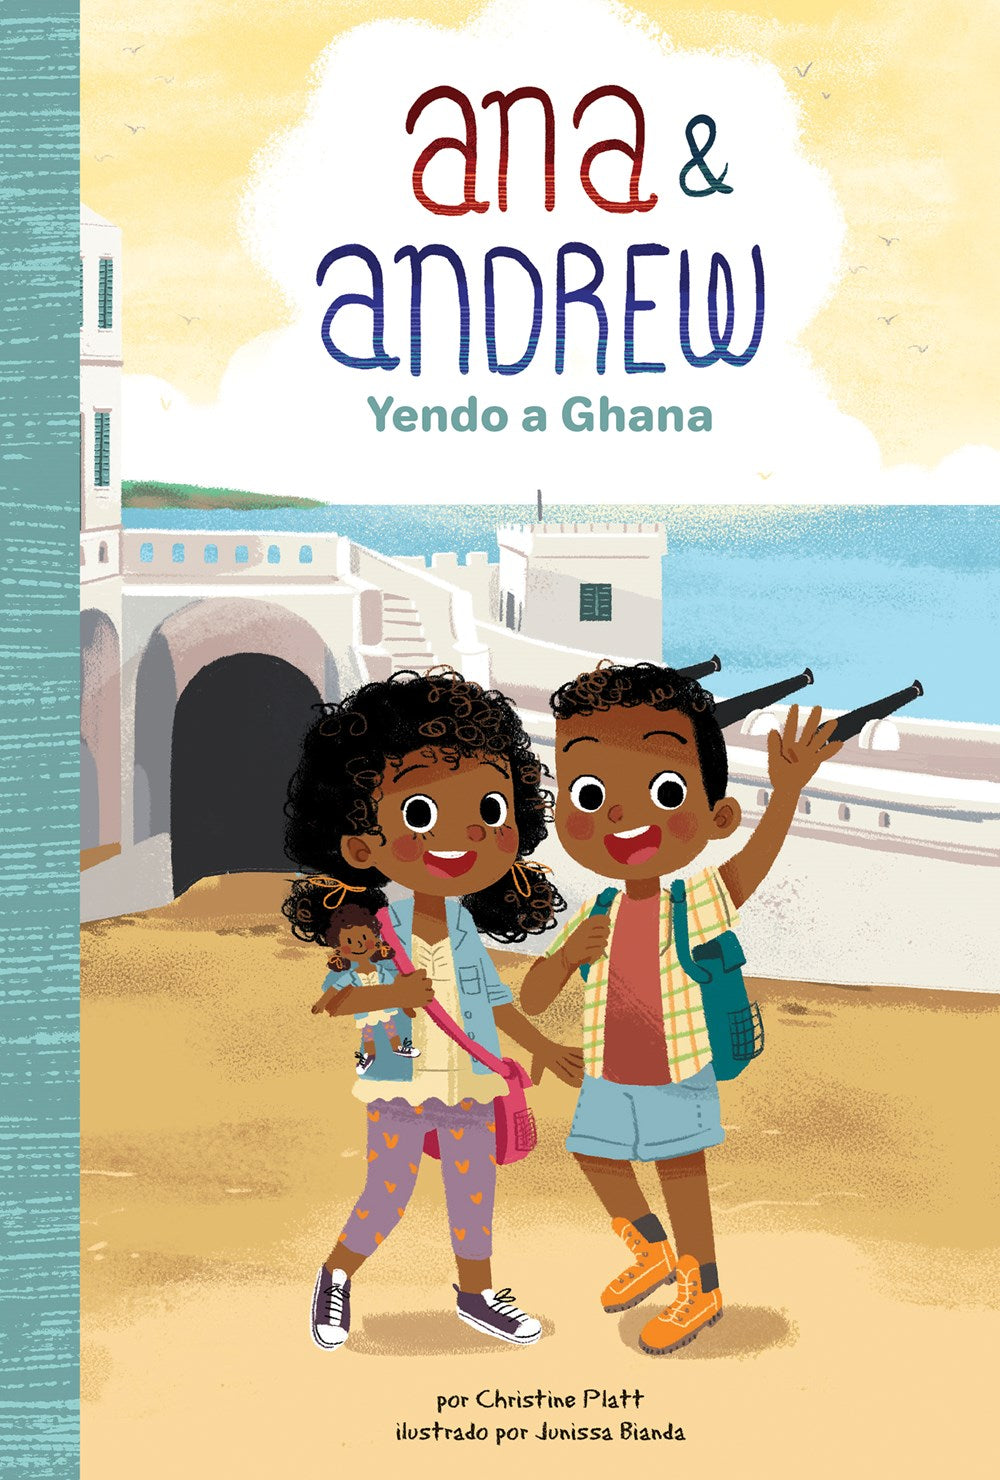 Ana & Andrew: Yendo a Ghana (Going to Ghana)